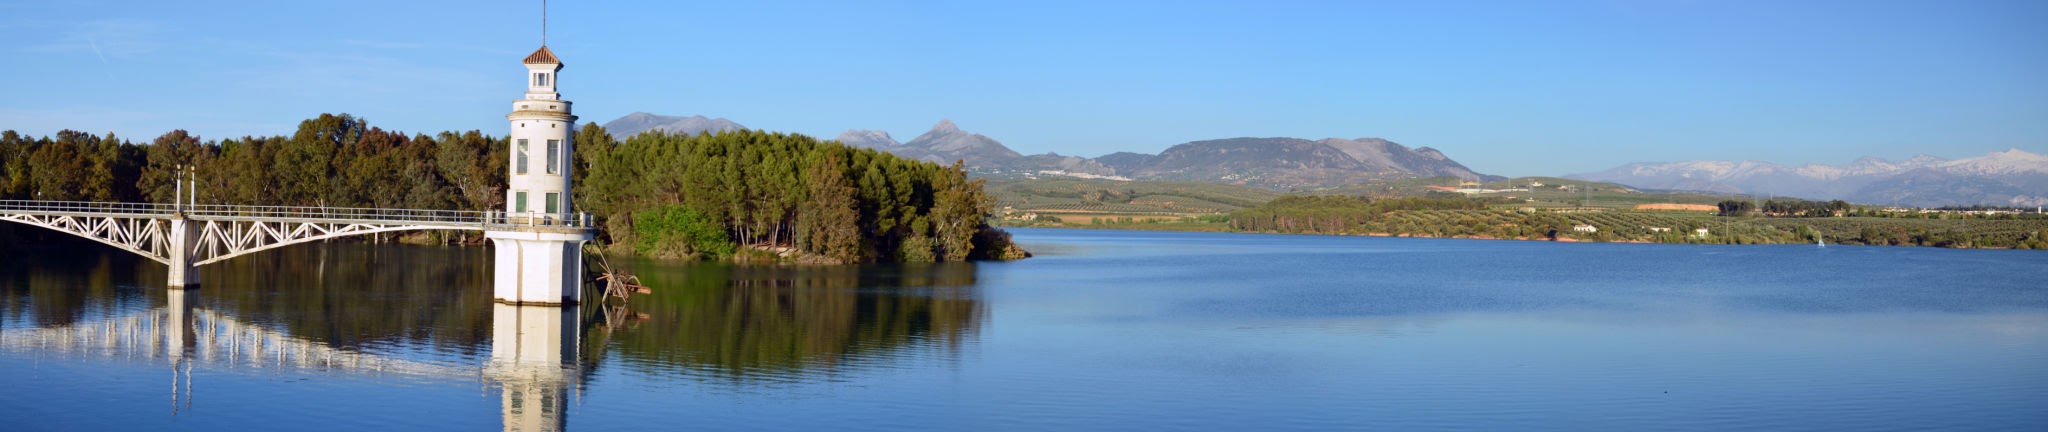 Cubillas Reservoir, Peligros